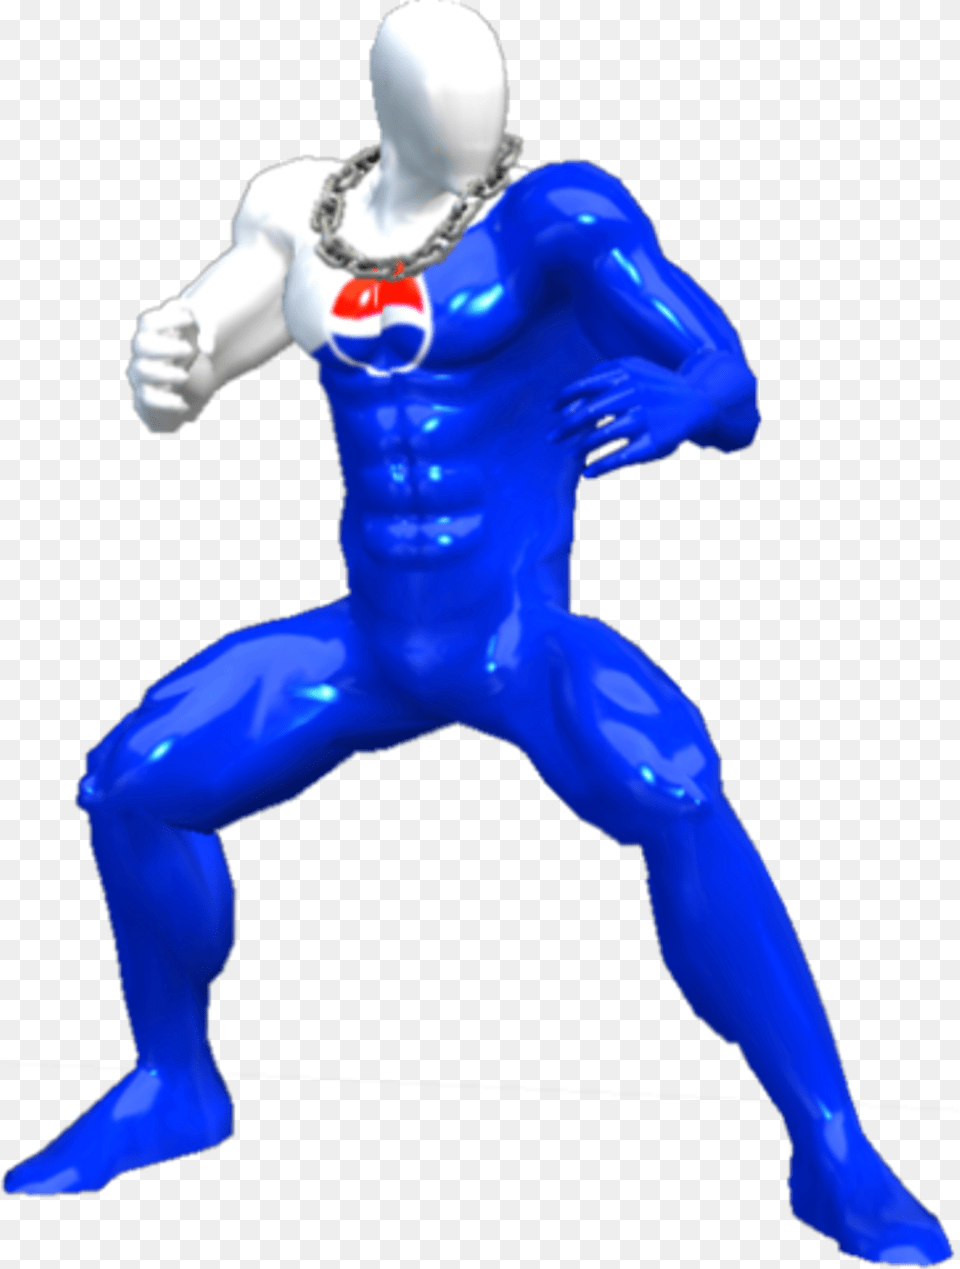 Captain Falcon Pepsi Man Pepsi Man Coke Man, Adult, Male, Person, Accessories Free Png Download